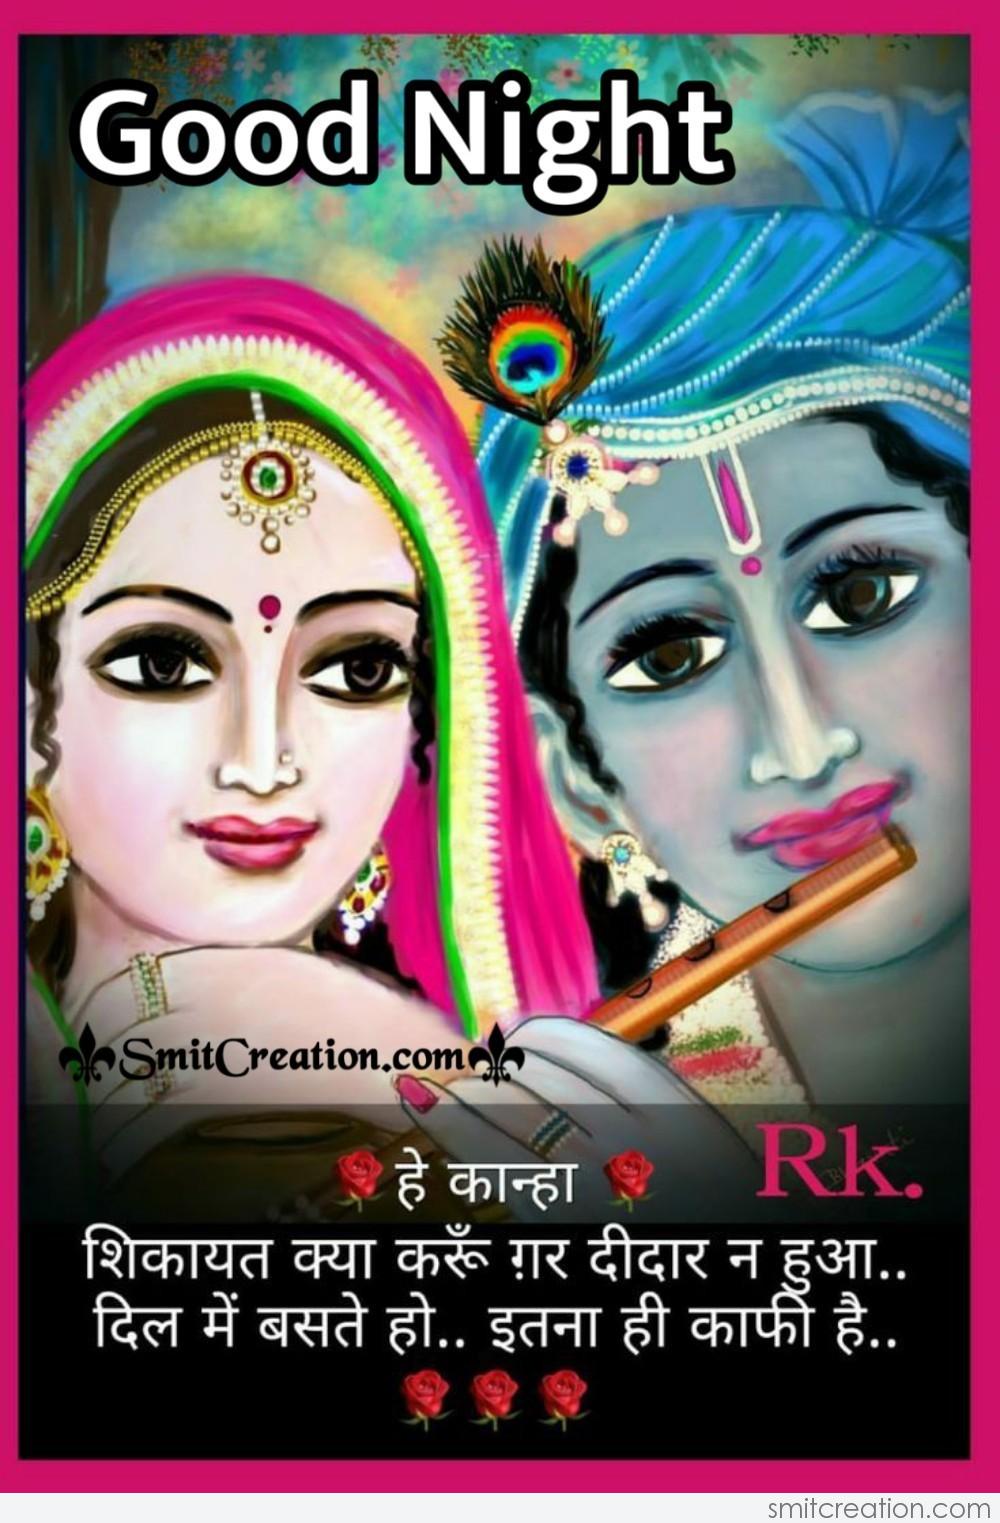 Radha Krishna Good Night Pictures and Graphics - SmitCreation.com